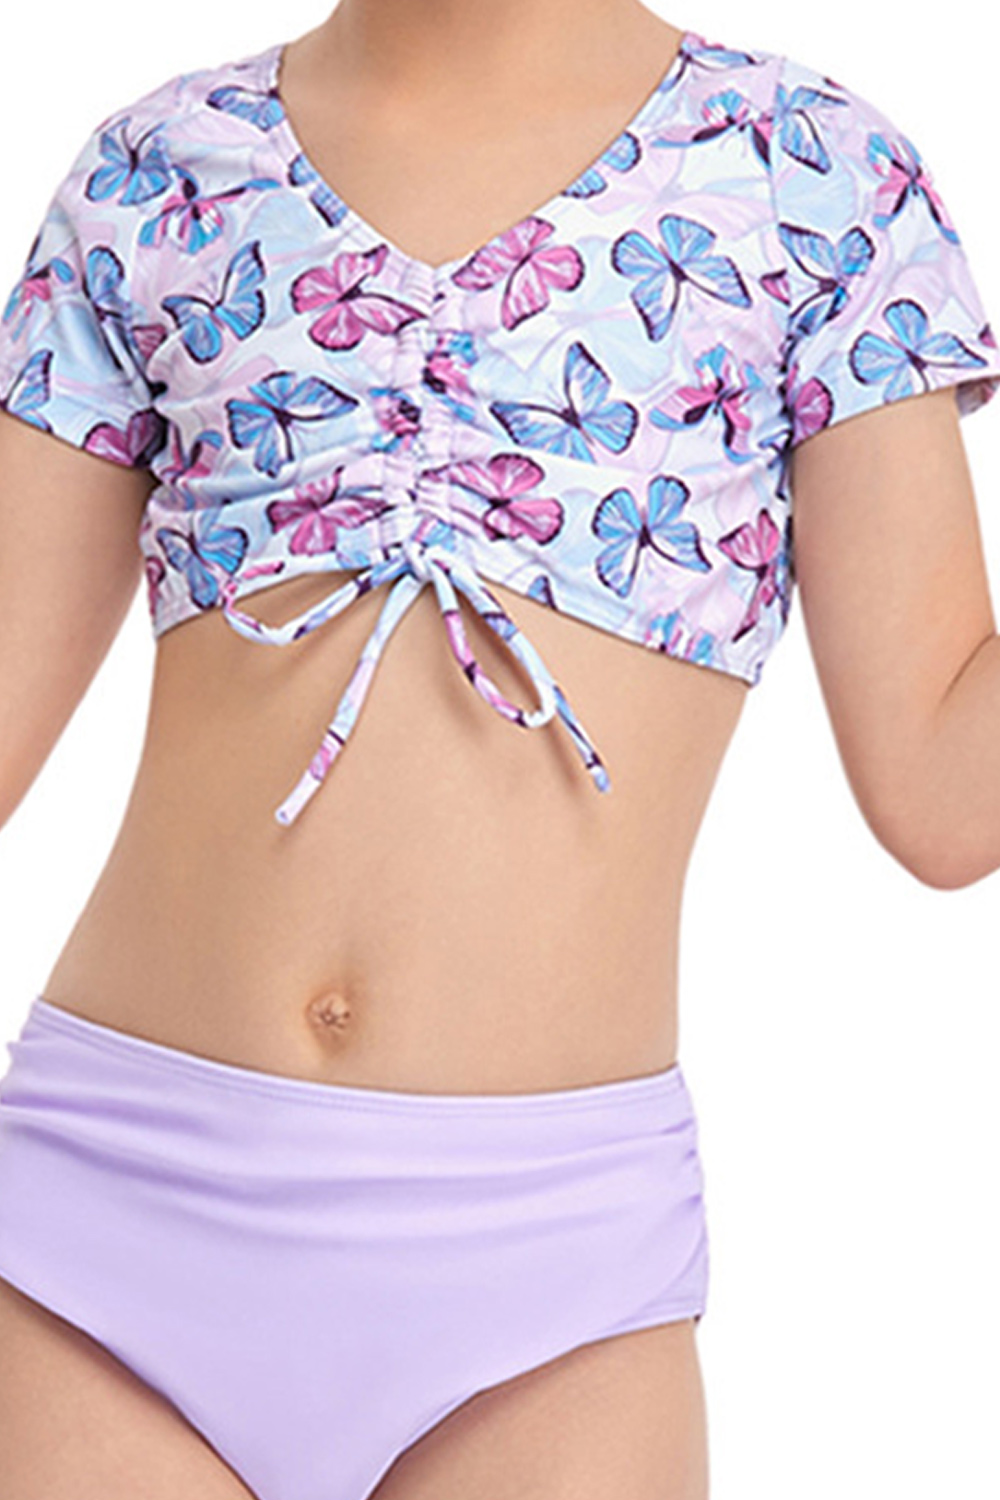 Unomatch Kids Girls V-Neck Printed Top Solid Bottom Swimsuit Set